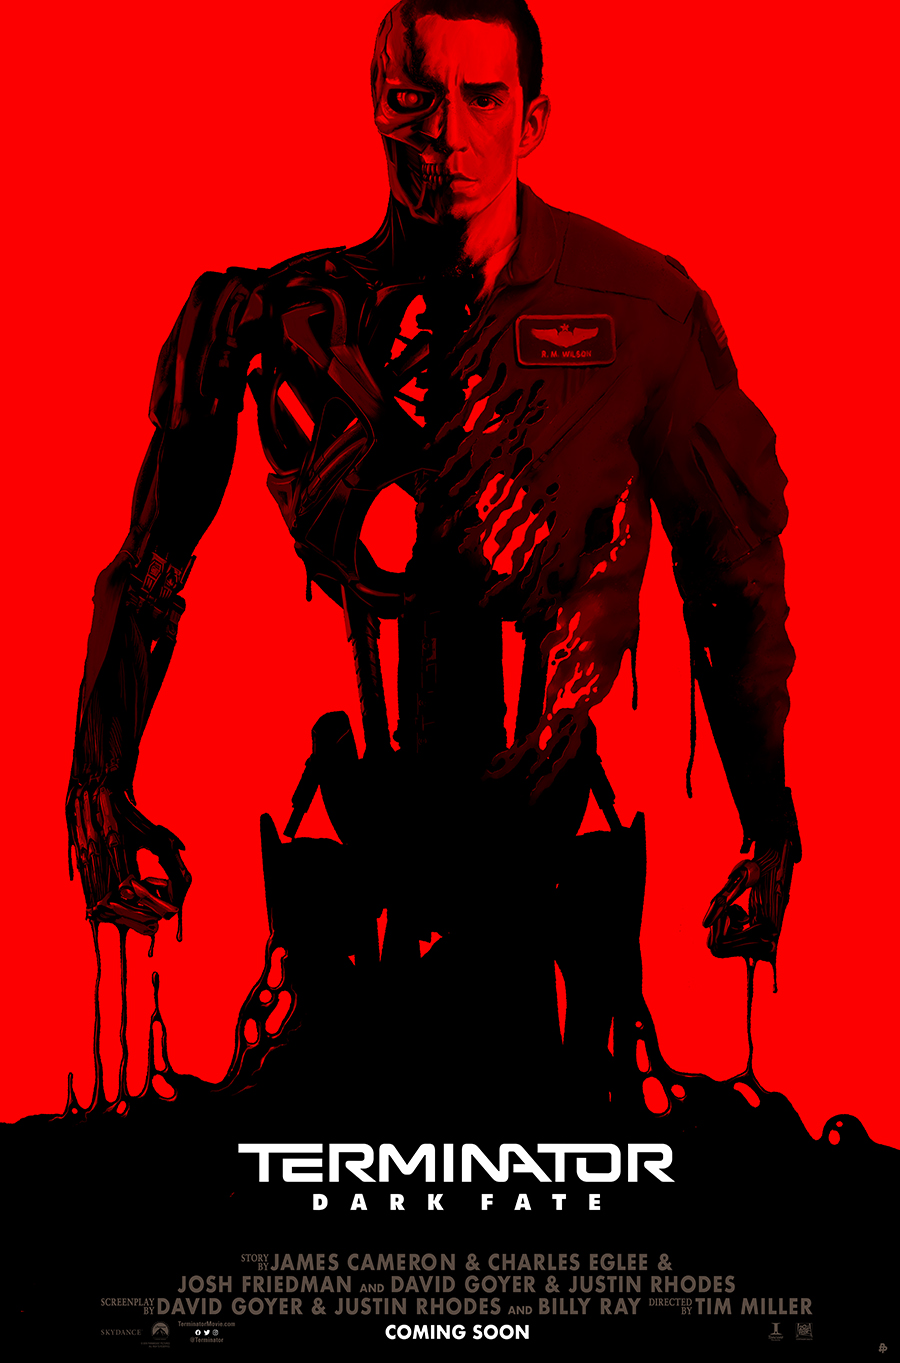 Artwork by Terminator: Dark Fate